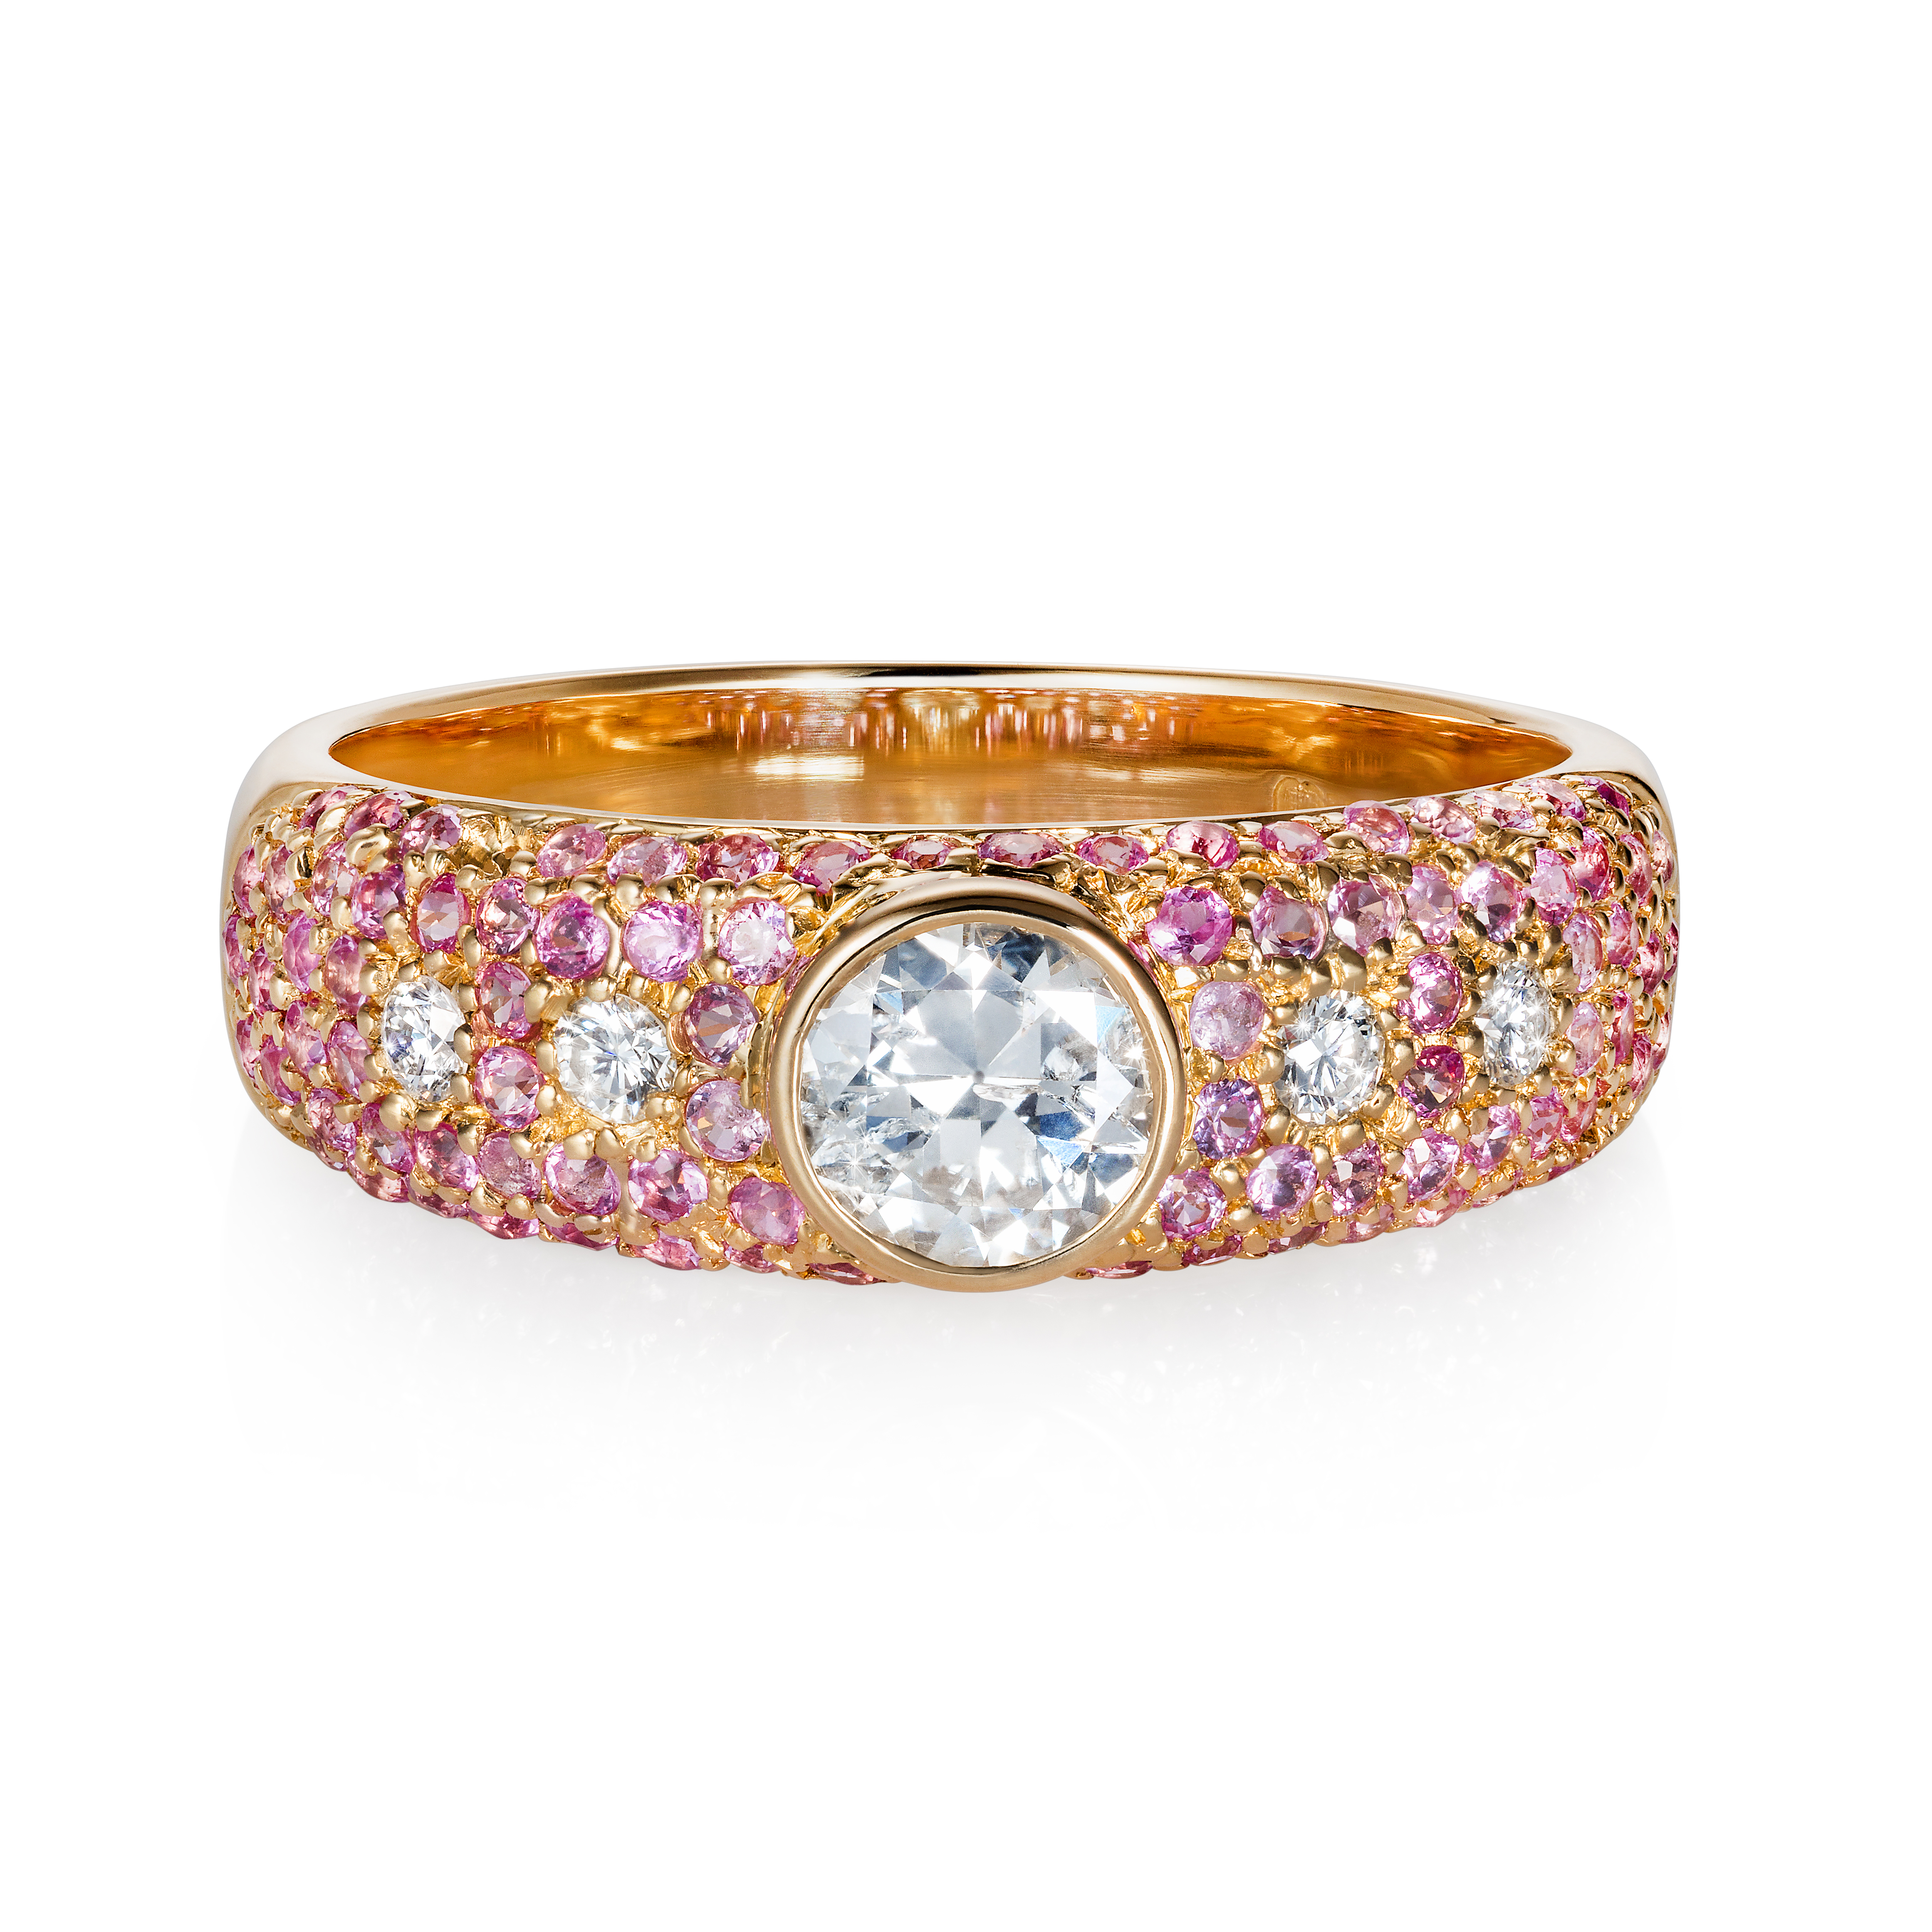 Bespoke Bridal – Diamond And Pink Sapphire 18k Gold Ring